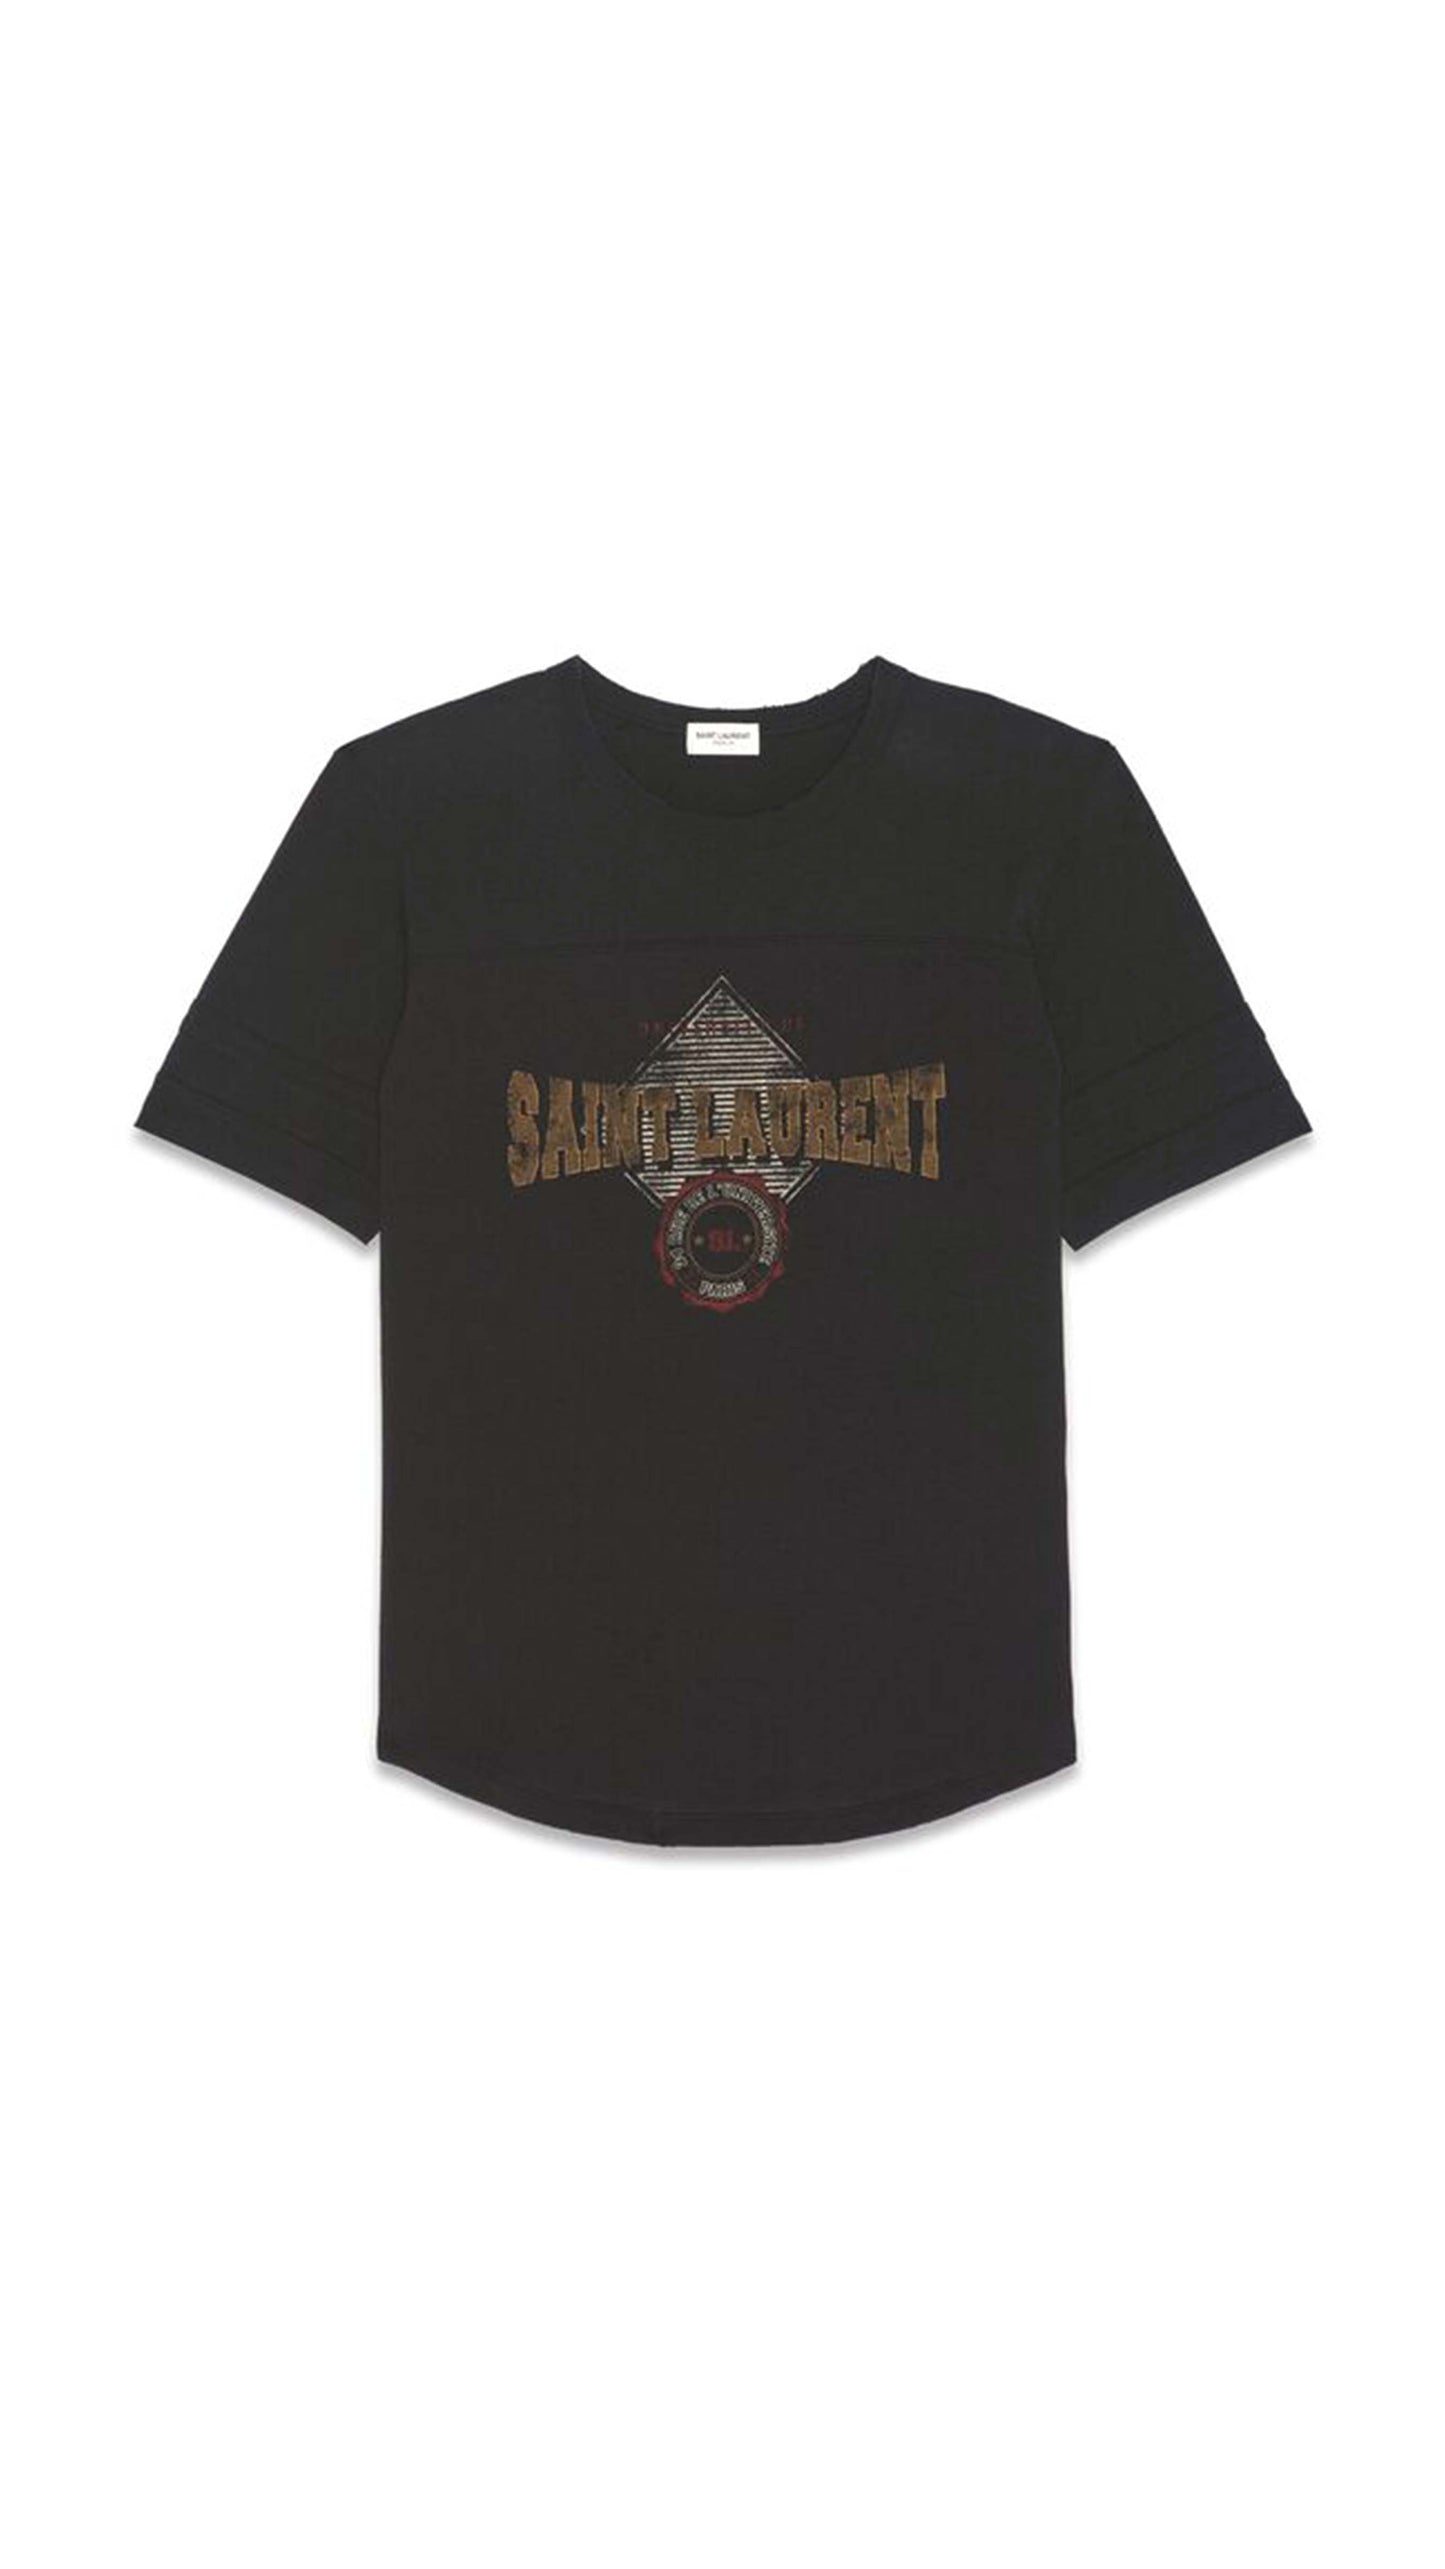 "University of Saint Laurent" T-shirt - Faded Black